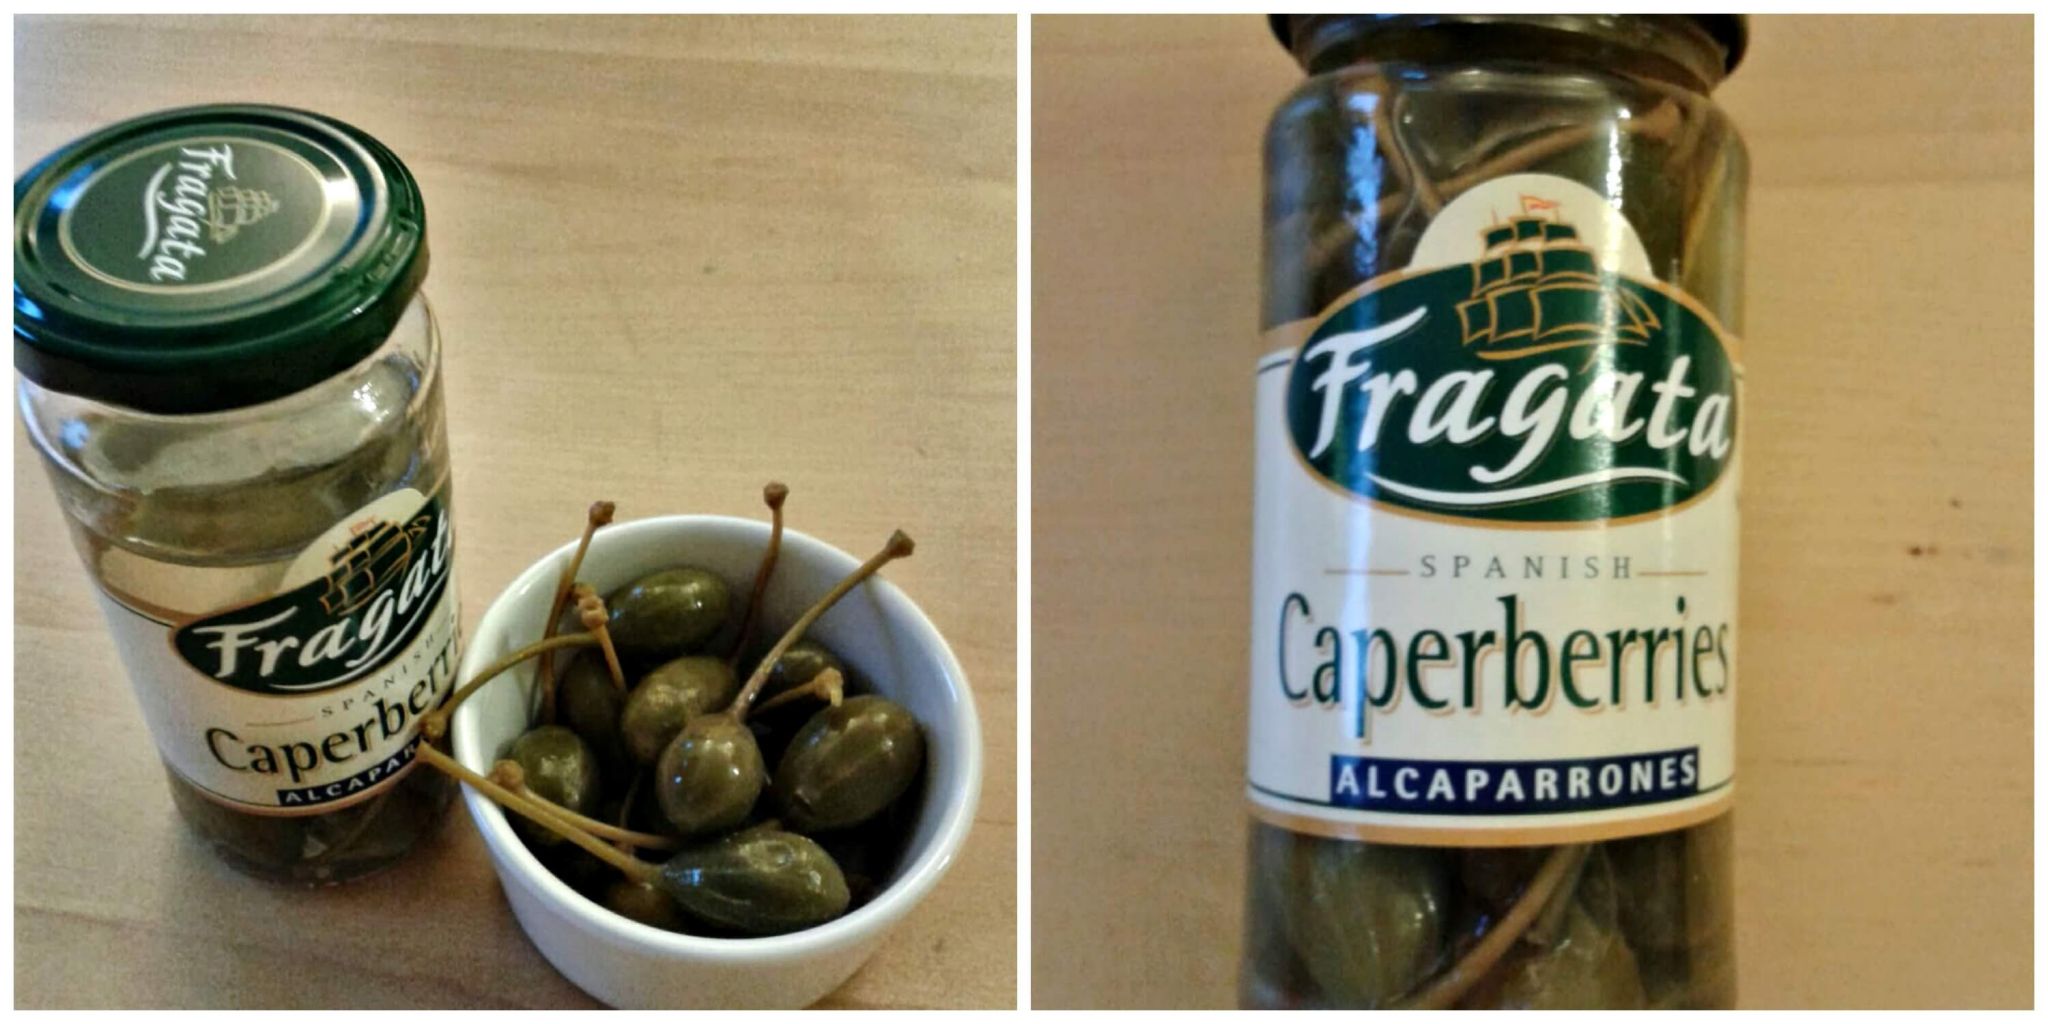 Fragata olives - Spanish Caperberries